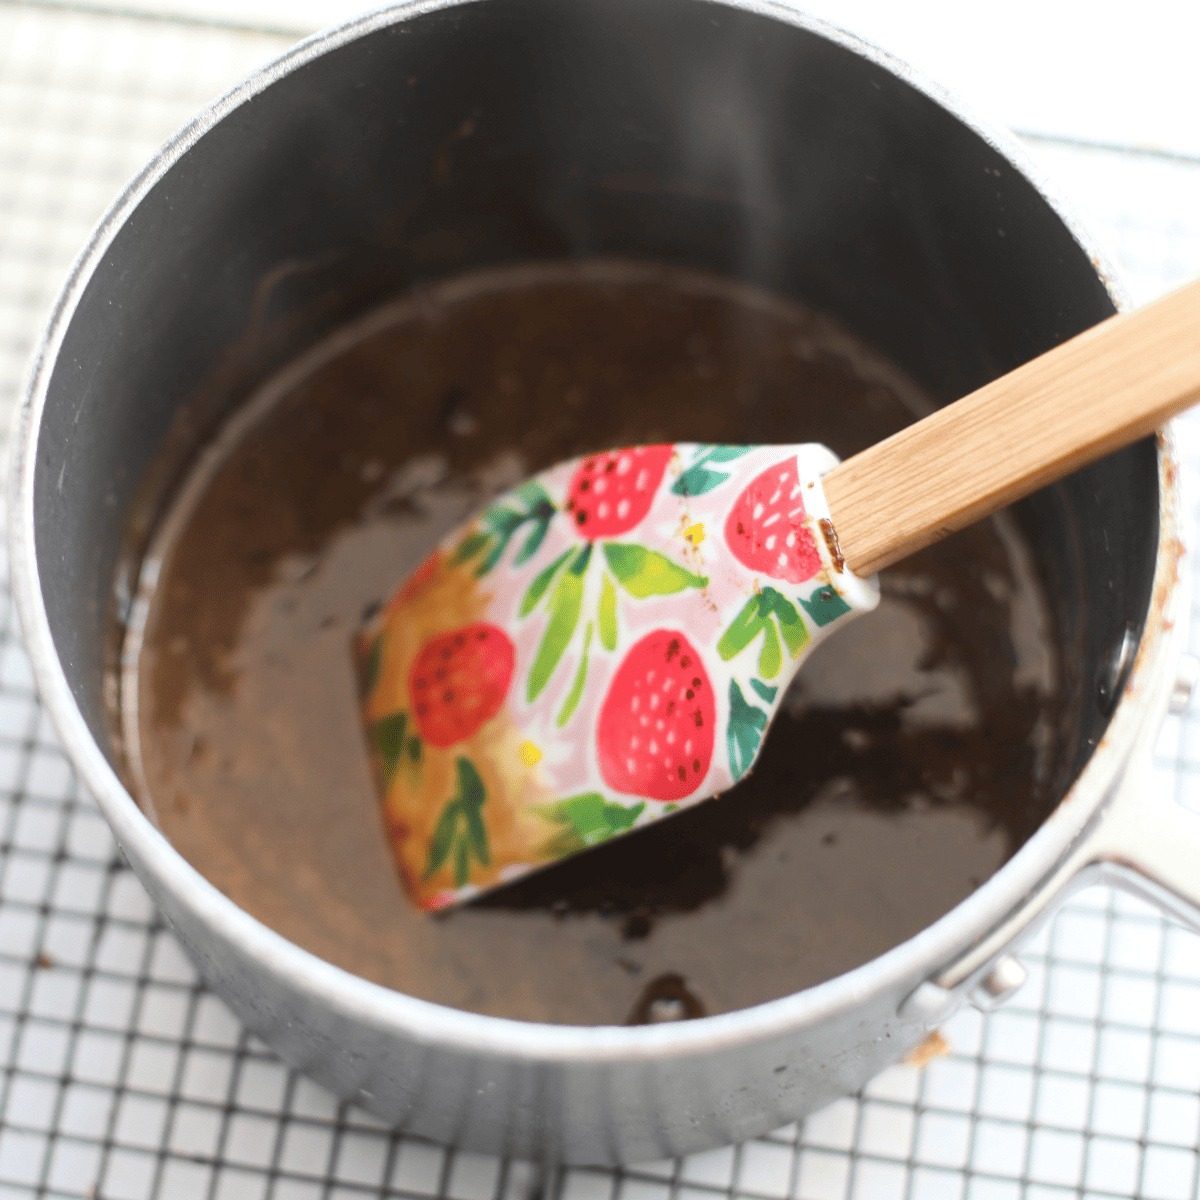 Melting sugar in a pan.